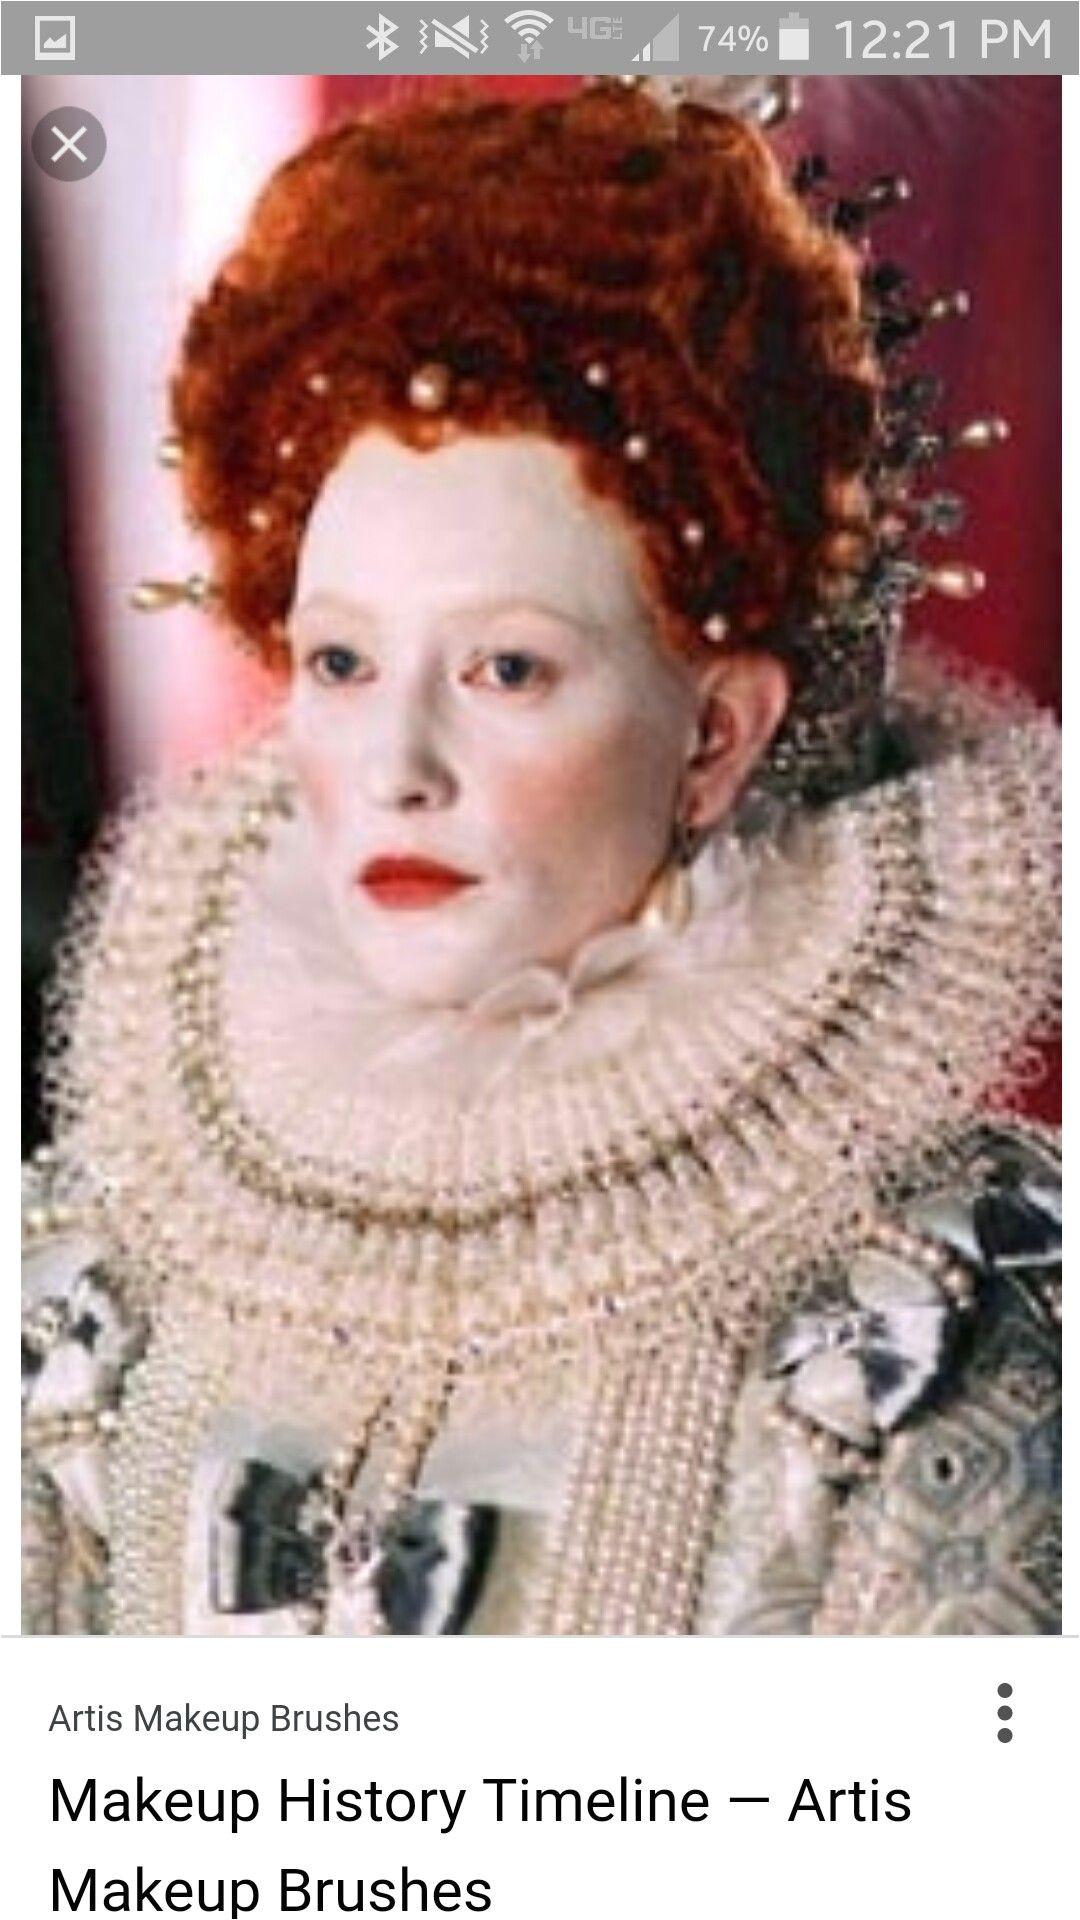 Makeup 101 Hair Makeup Queen Elizabeth Elizabethan Era Elizabethan Costume Renaissance